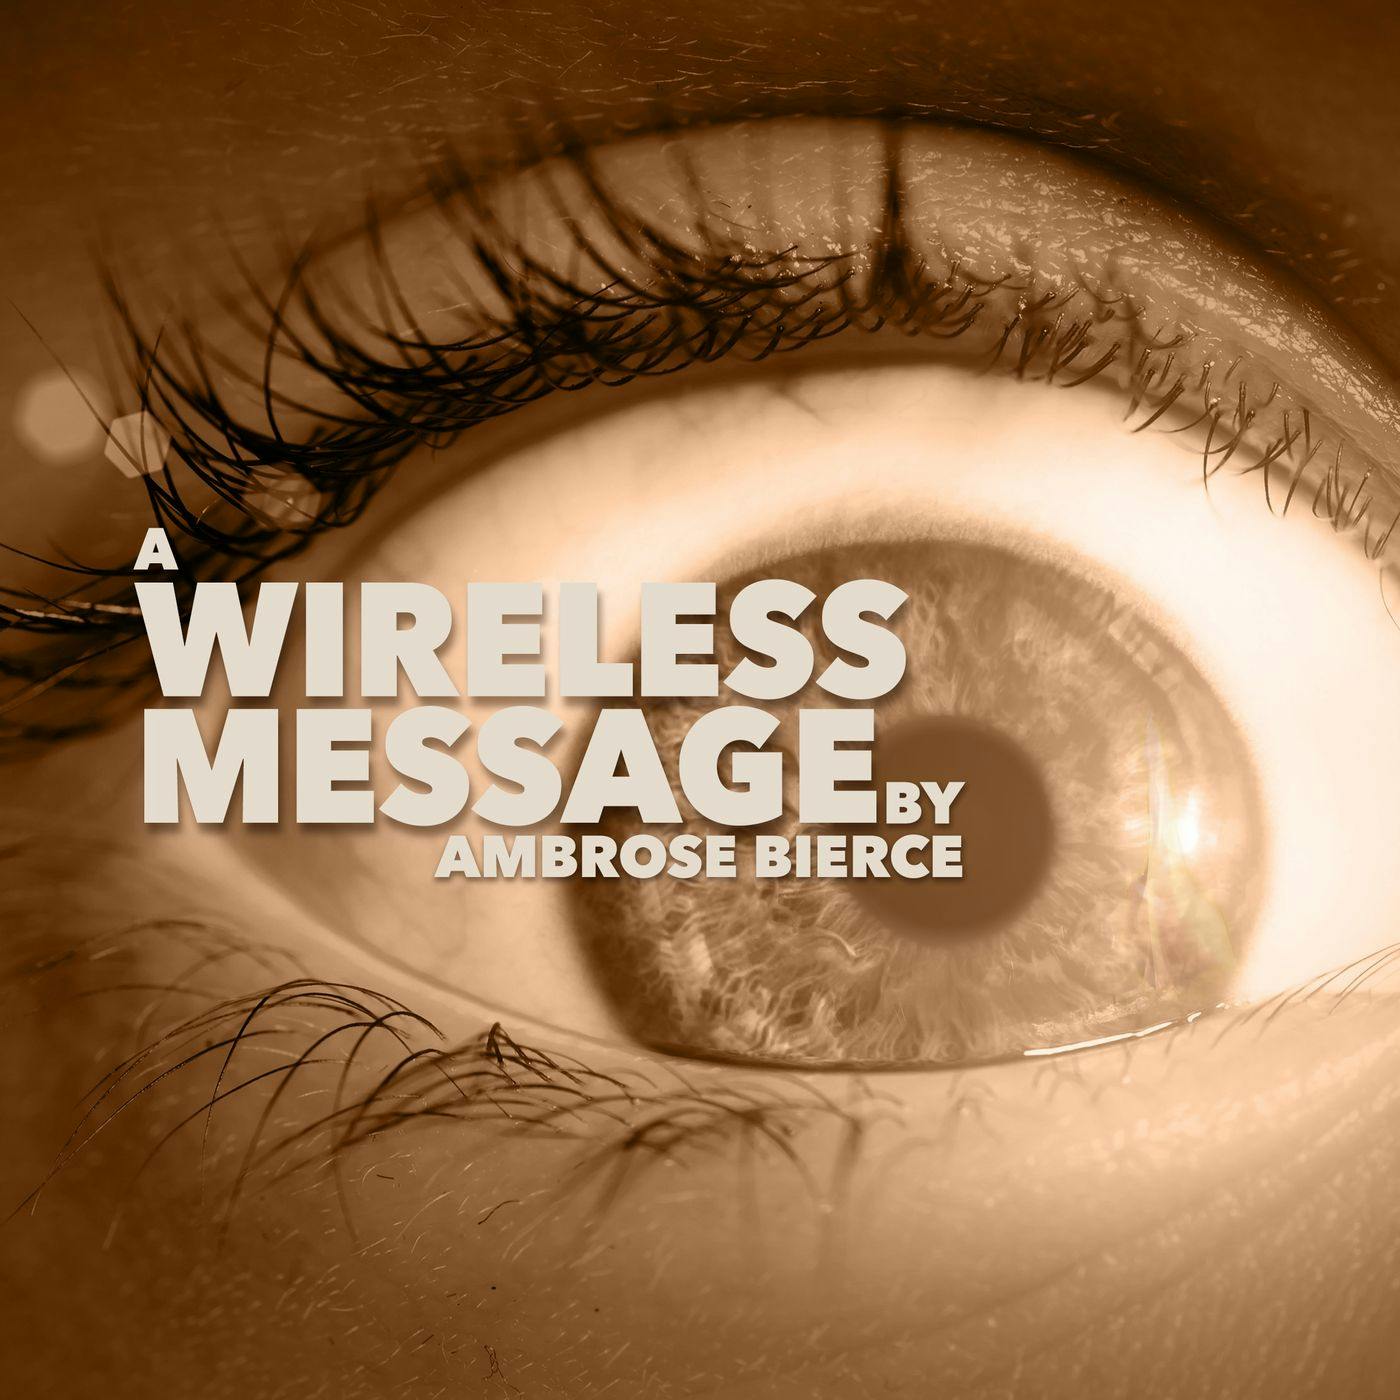 A Wireless Message by Ambrose Bierce